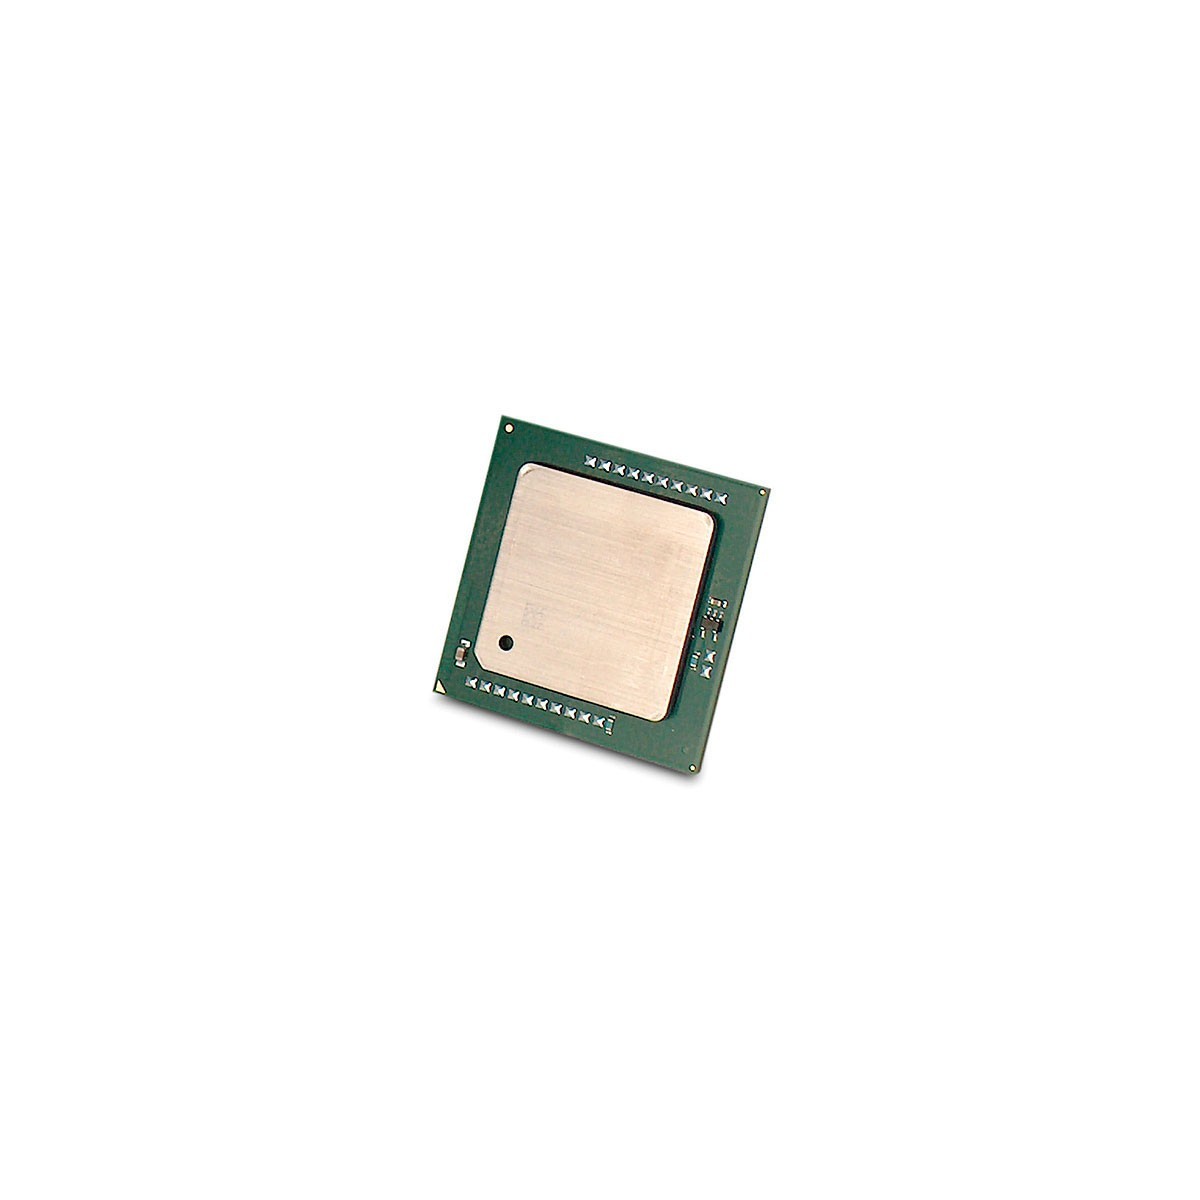 HPE Processor E7-4809 v3 w-jacket - 2 GHz